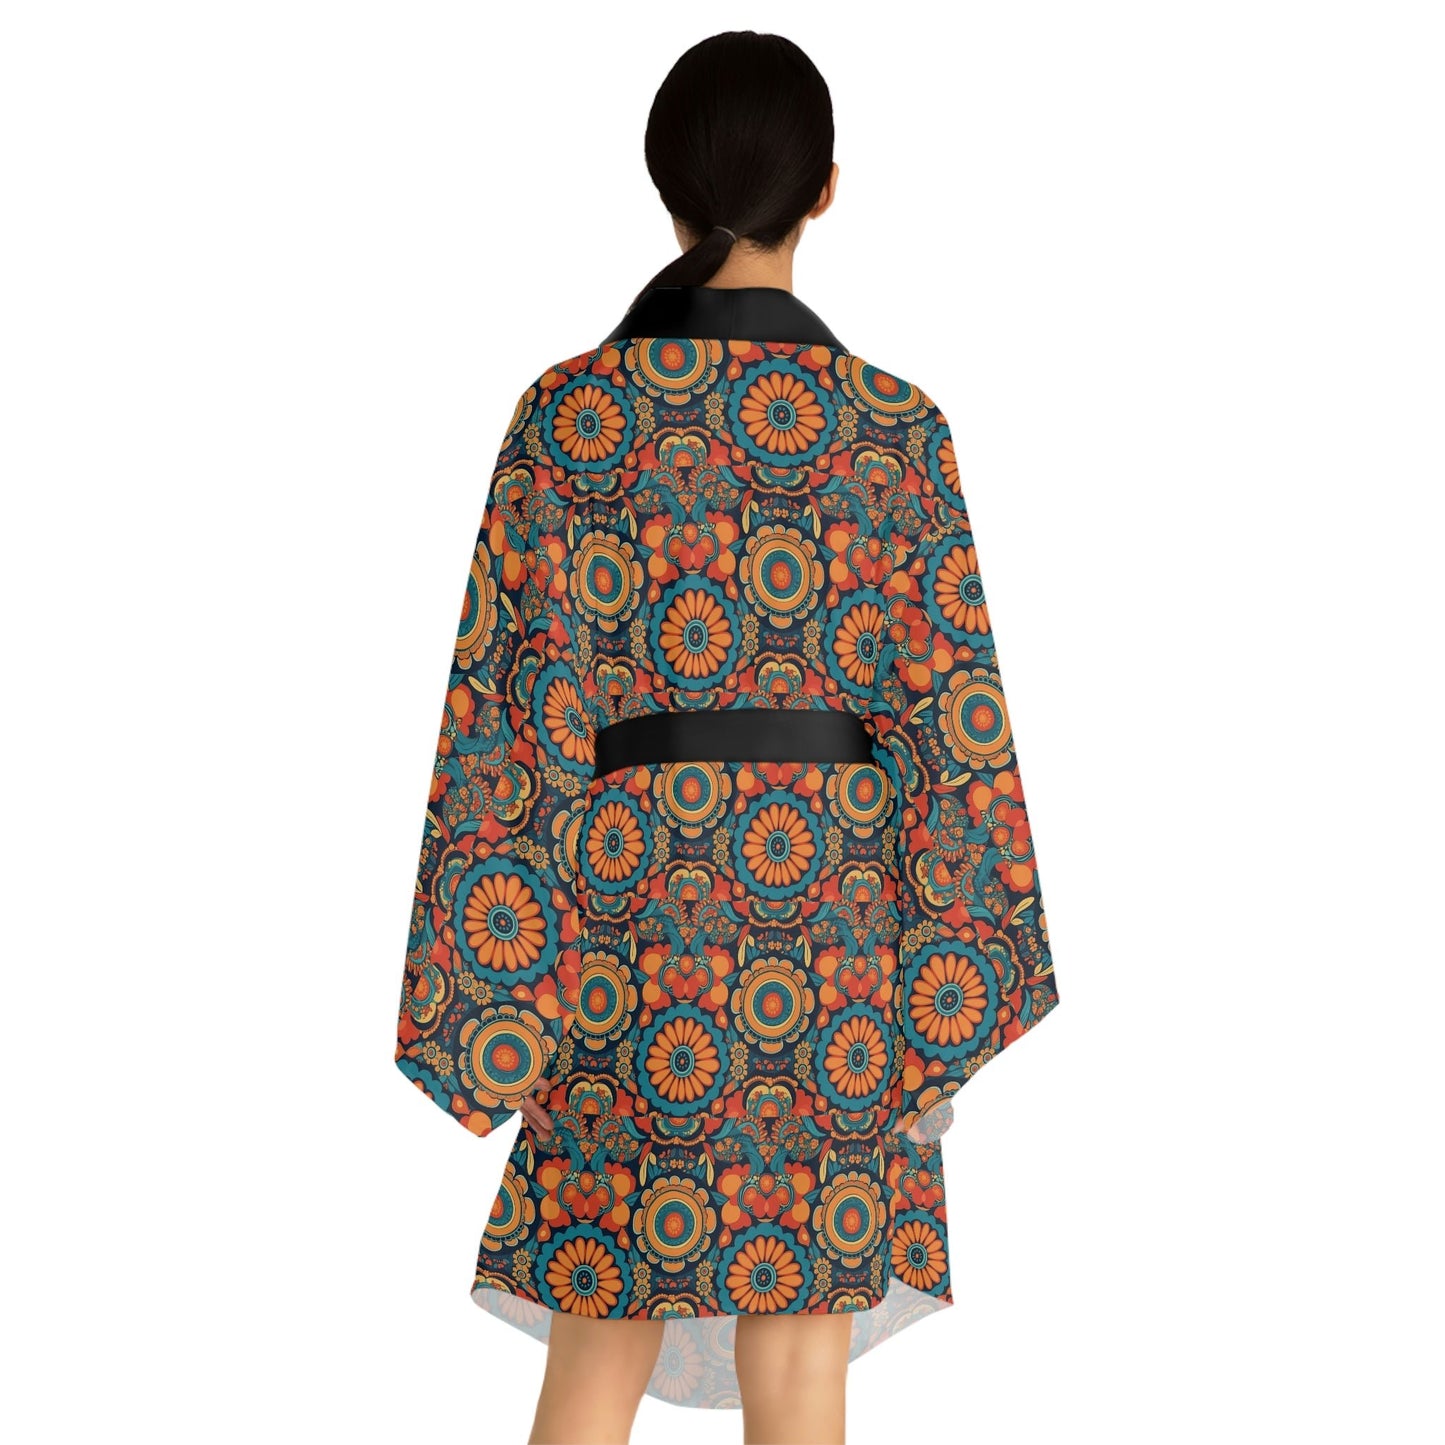 BOHO Hippy Floral Long Sleeve Kimono Robe - Perfect Gift for the Botanical Cottagecore Aesthetic Nature Lover